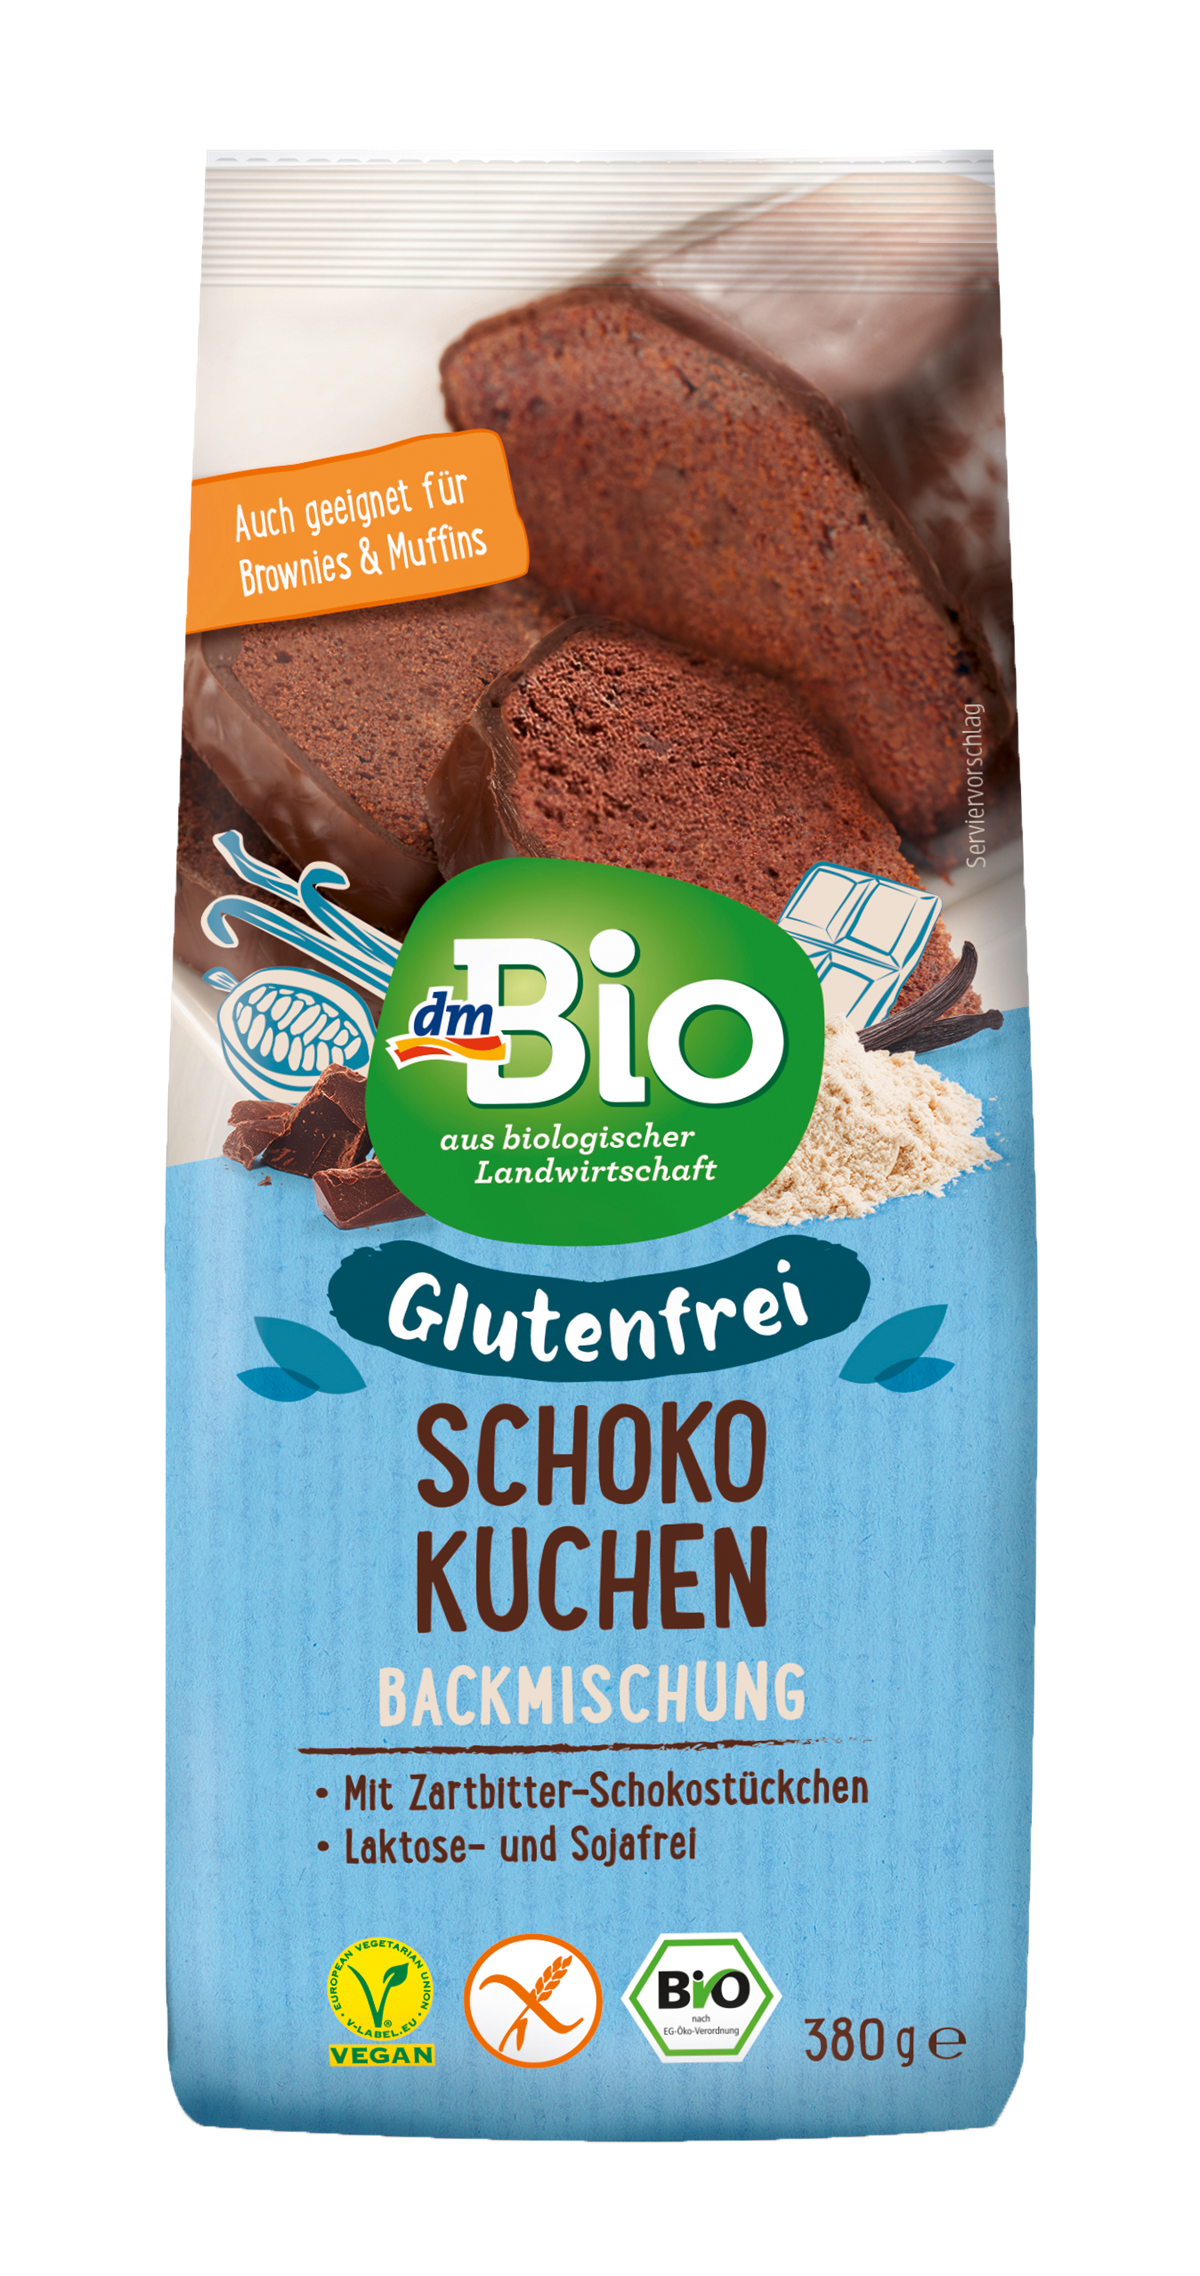 dmBio glutenfreie Backmischung Schokokuchen (380): 2,75 €